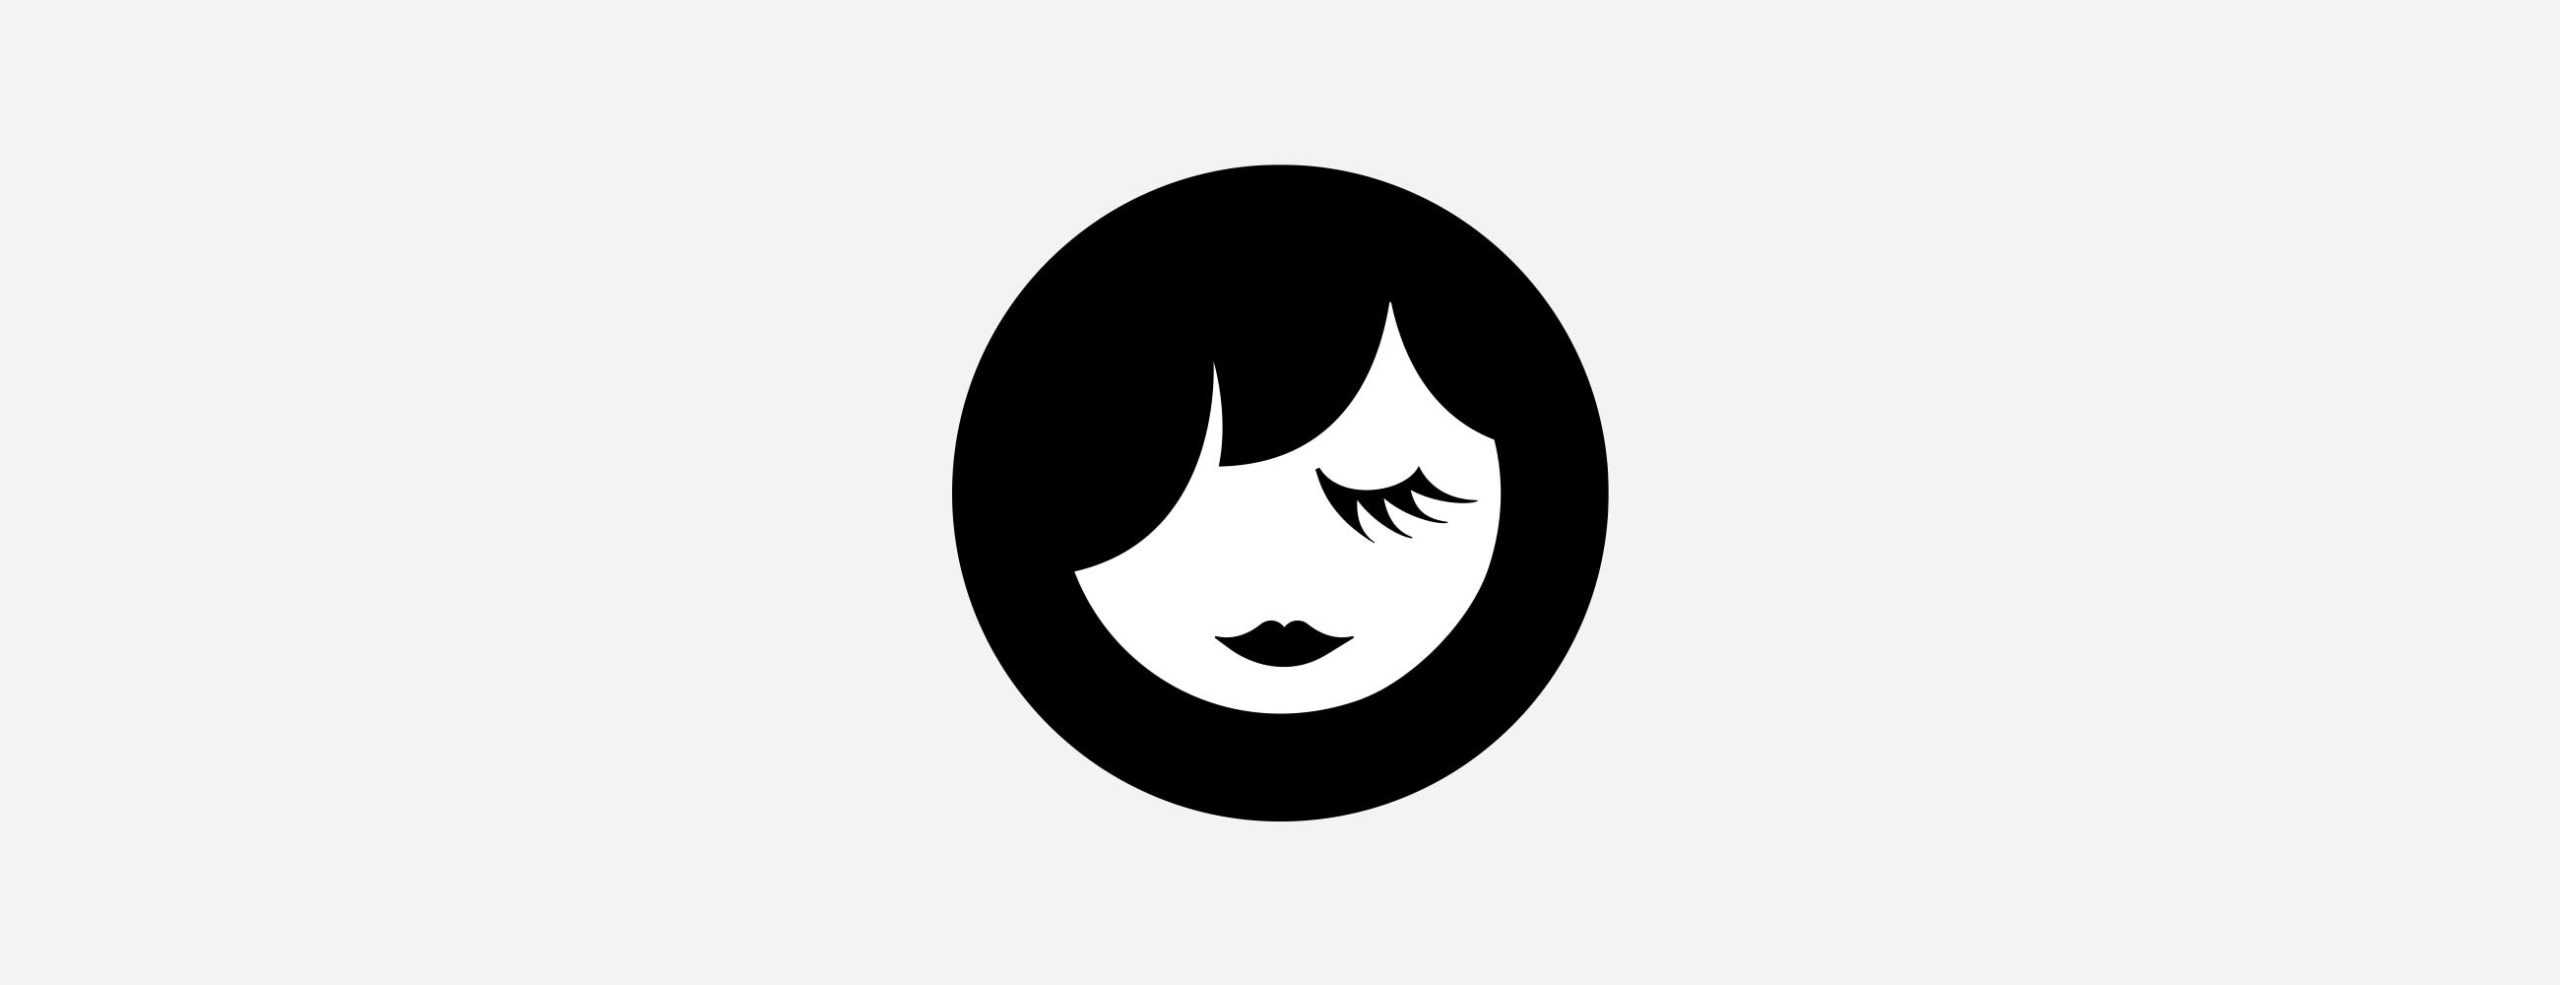 Sephora User Profile Illustration Design by Nicole Hammonds